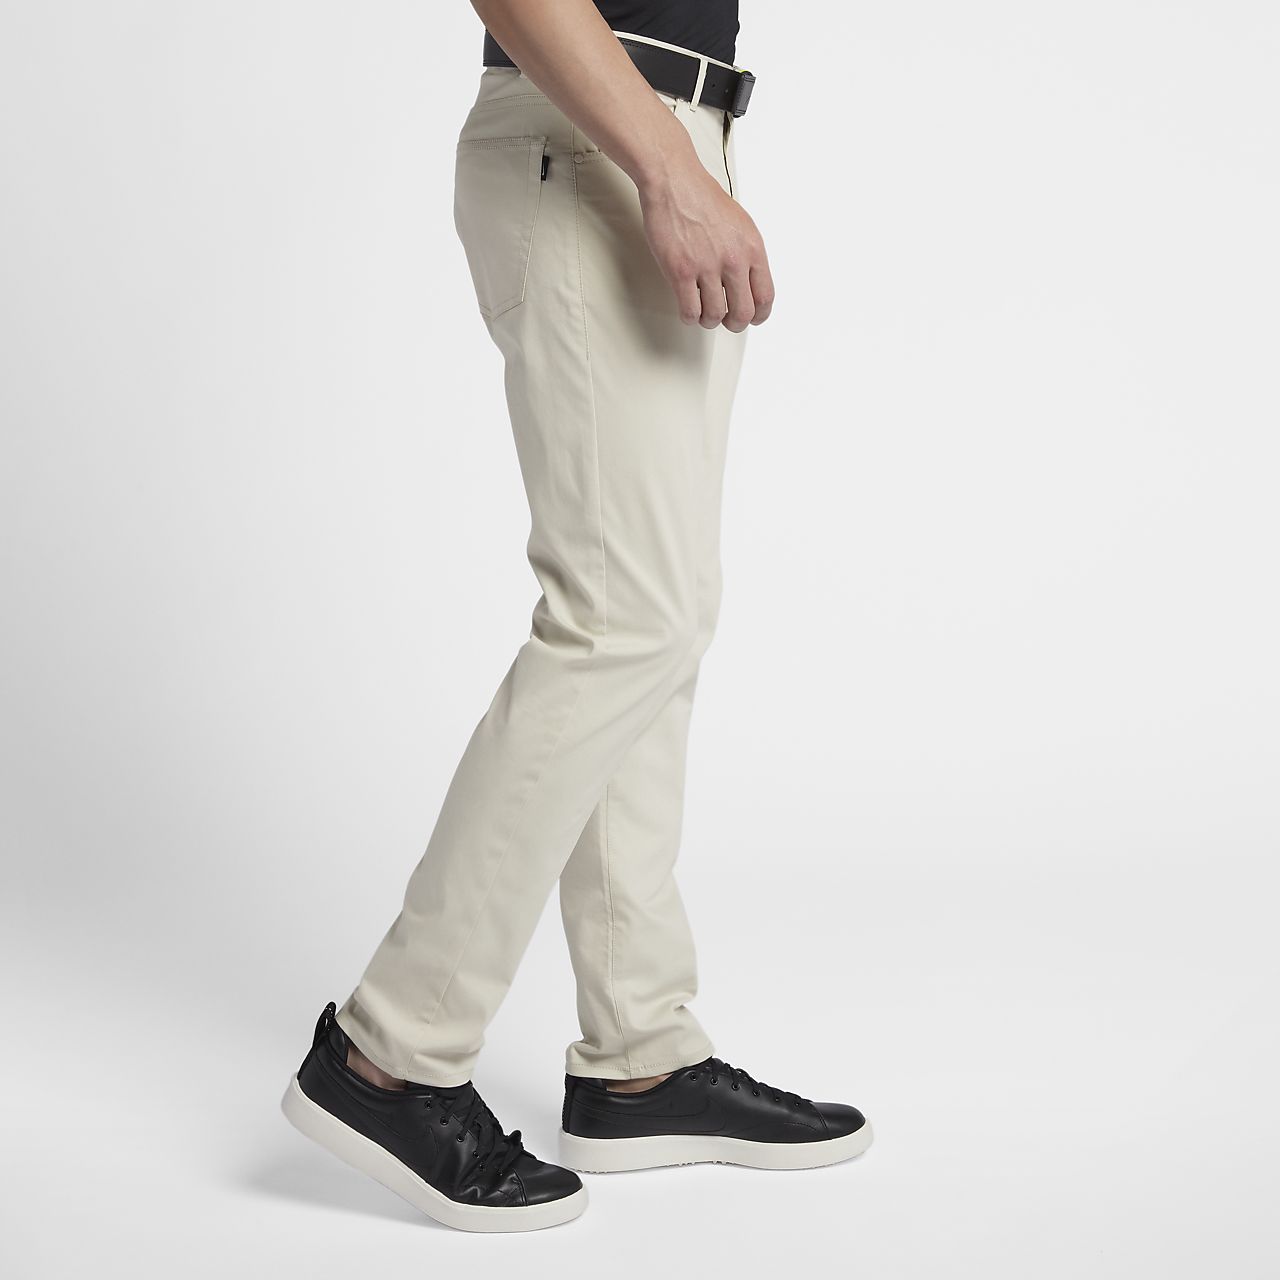 nike men's slim flex 5 pocket golf pants